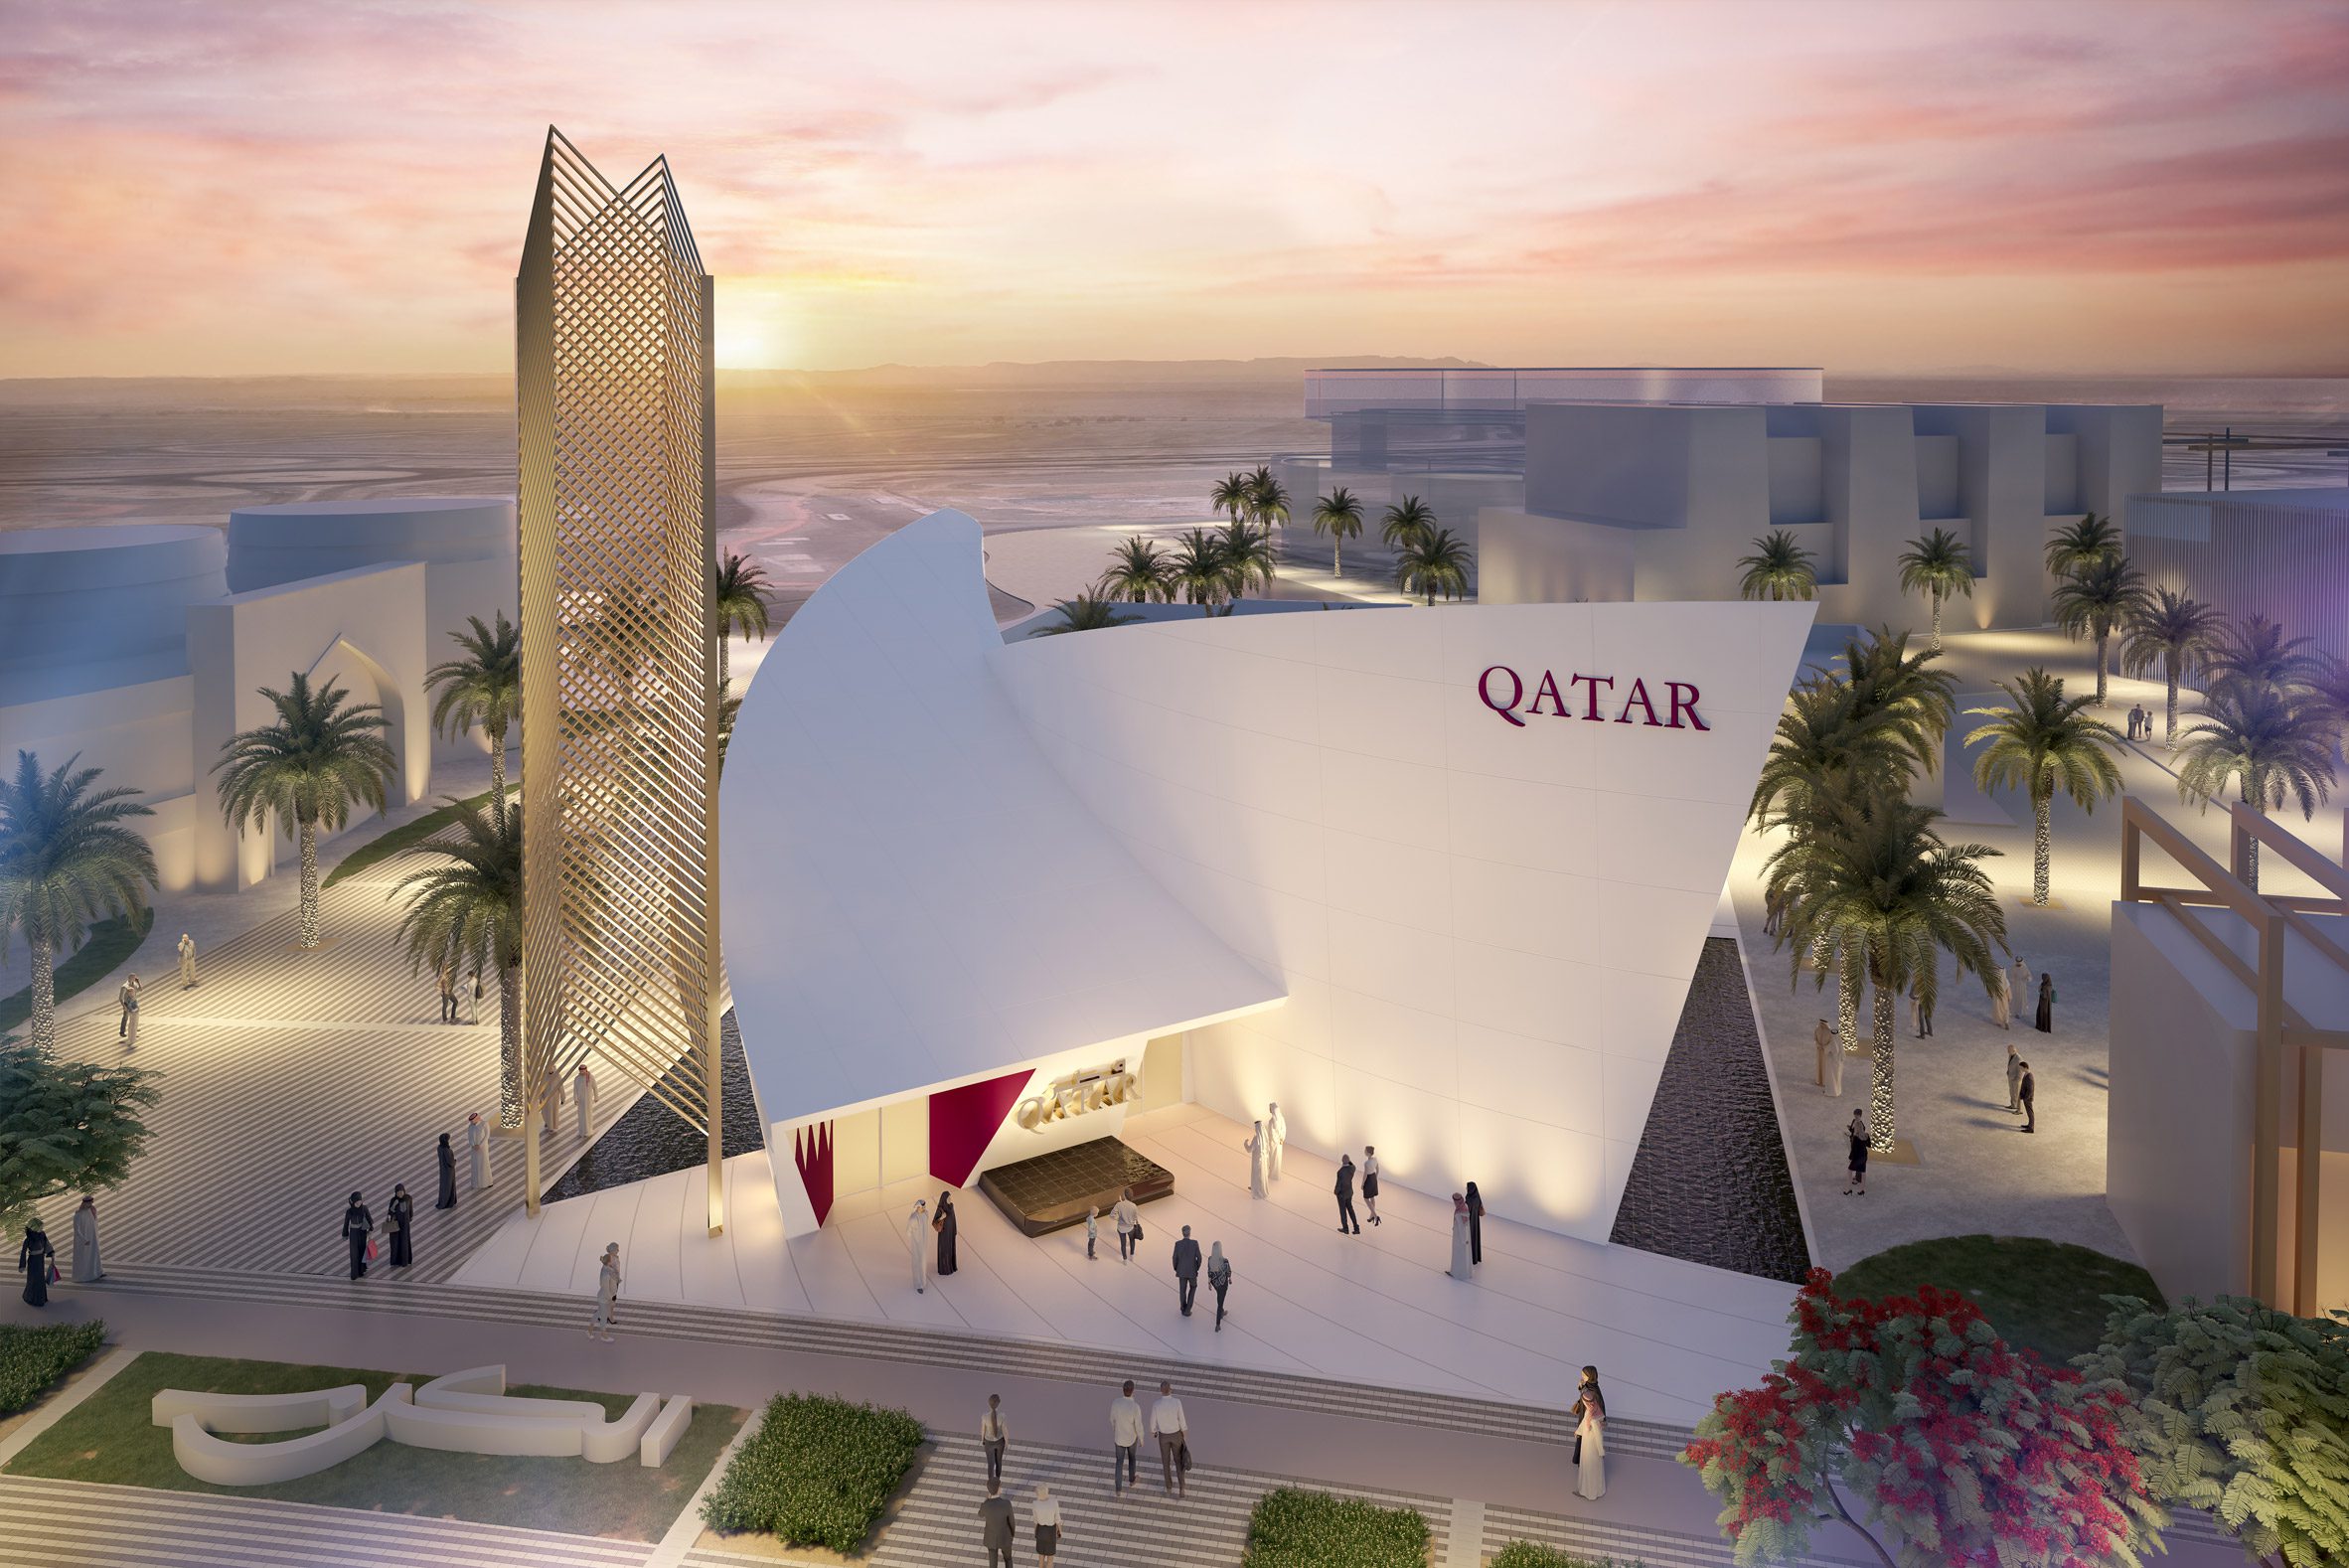 Qatar Pavilion by Calatrava